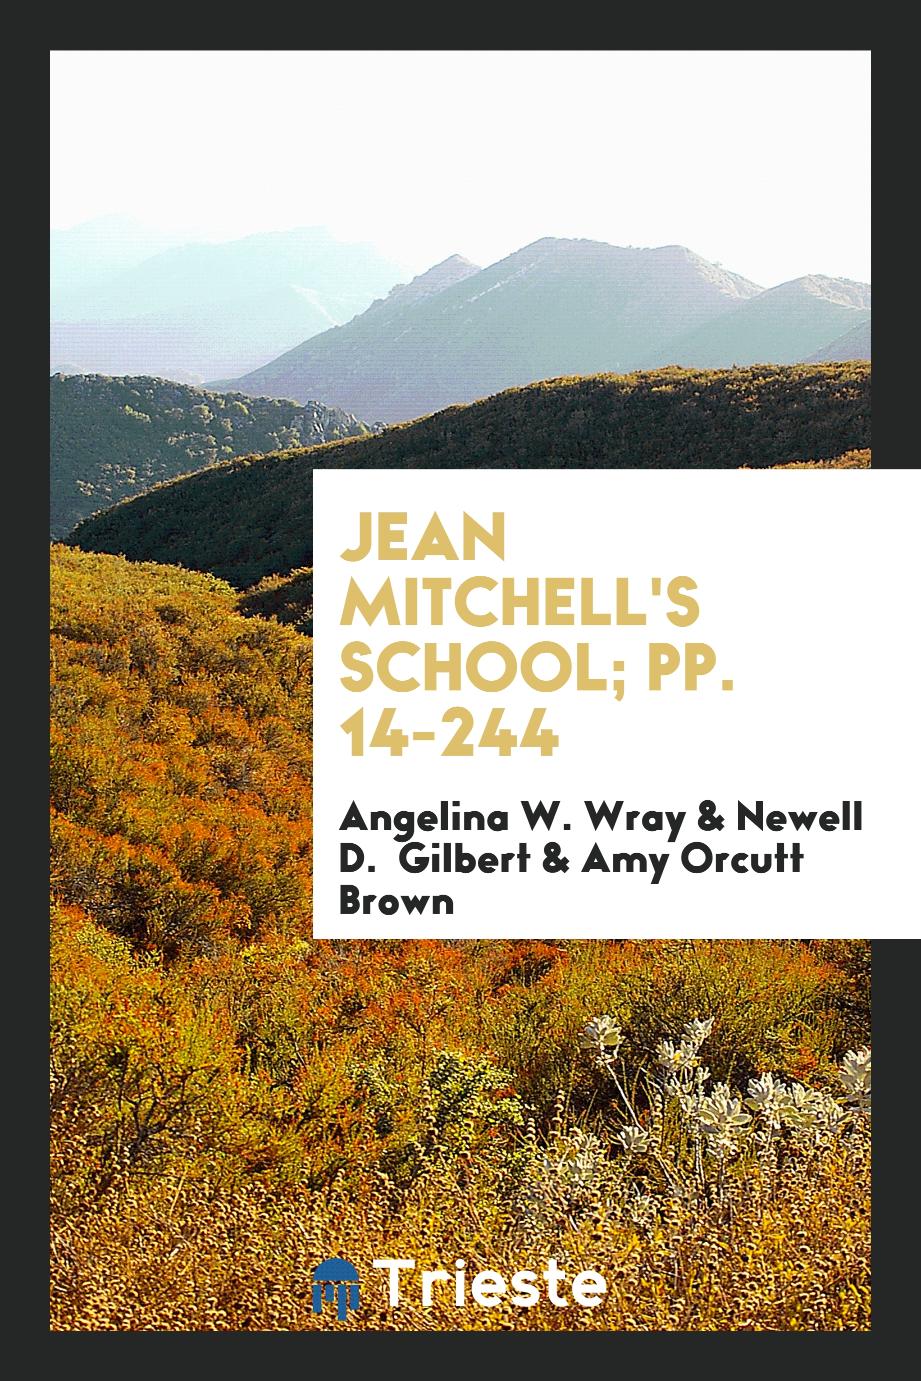 Jean Mitchell's School; pp. 14-244